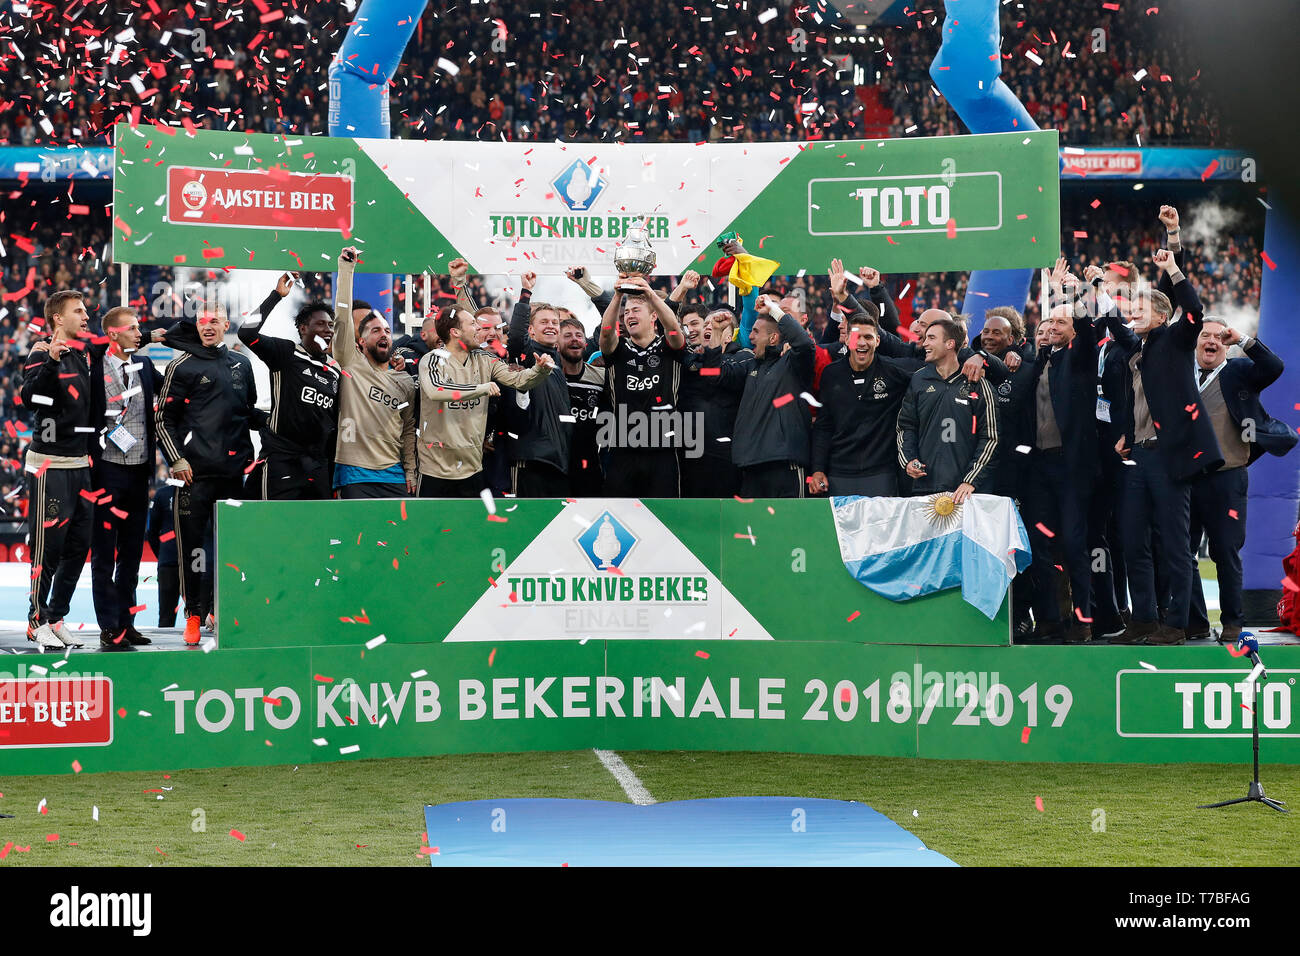 Rotterdam, Netherlands. 05th May, 2019. ROTTERDAM, 05-05-2019 Stadium de Kuip, Season 2018/2019 Dutch Cup Final for the KNVB beker, Ajax player Matthijs de Ligt lifting the cup the game Willem II -